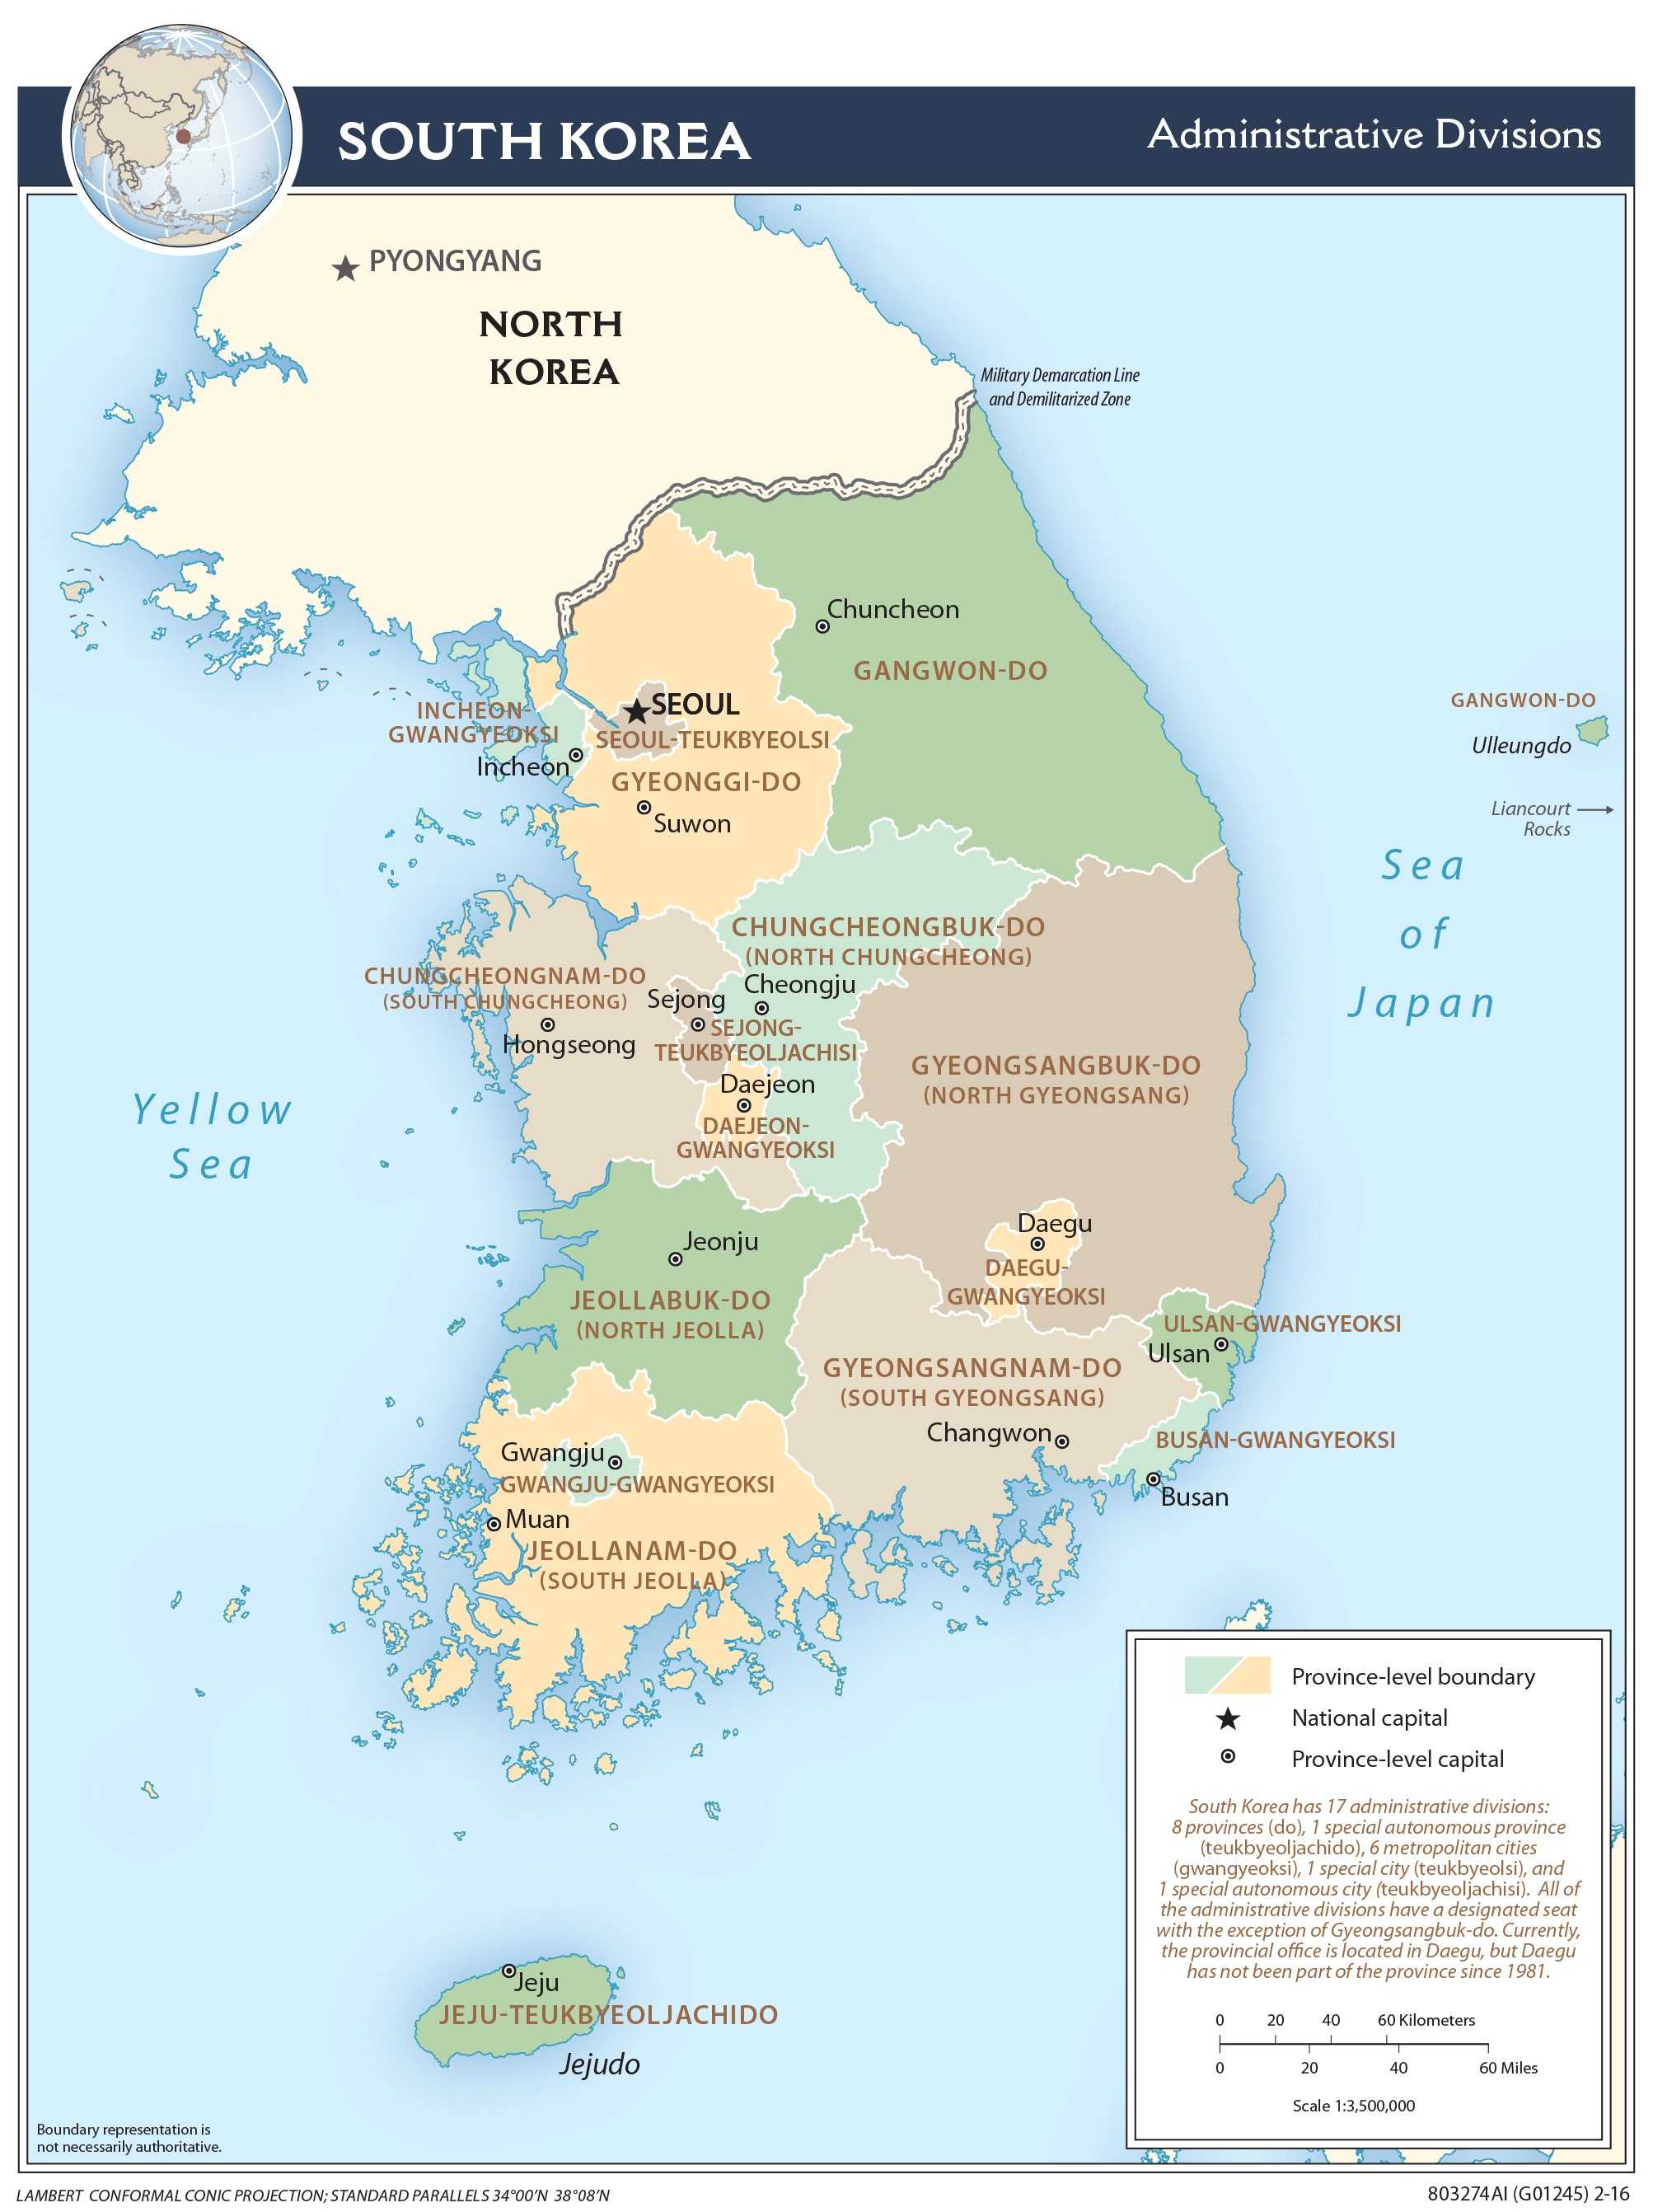 Administrative map of South Korea.